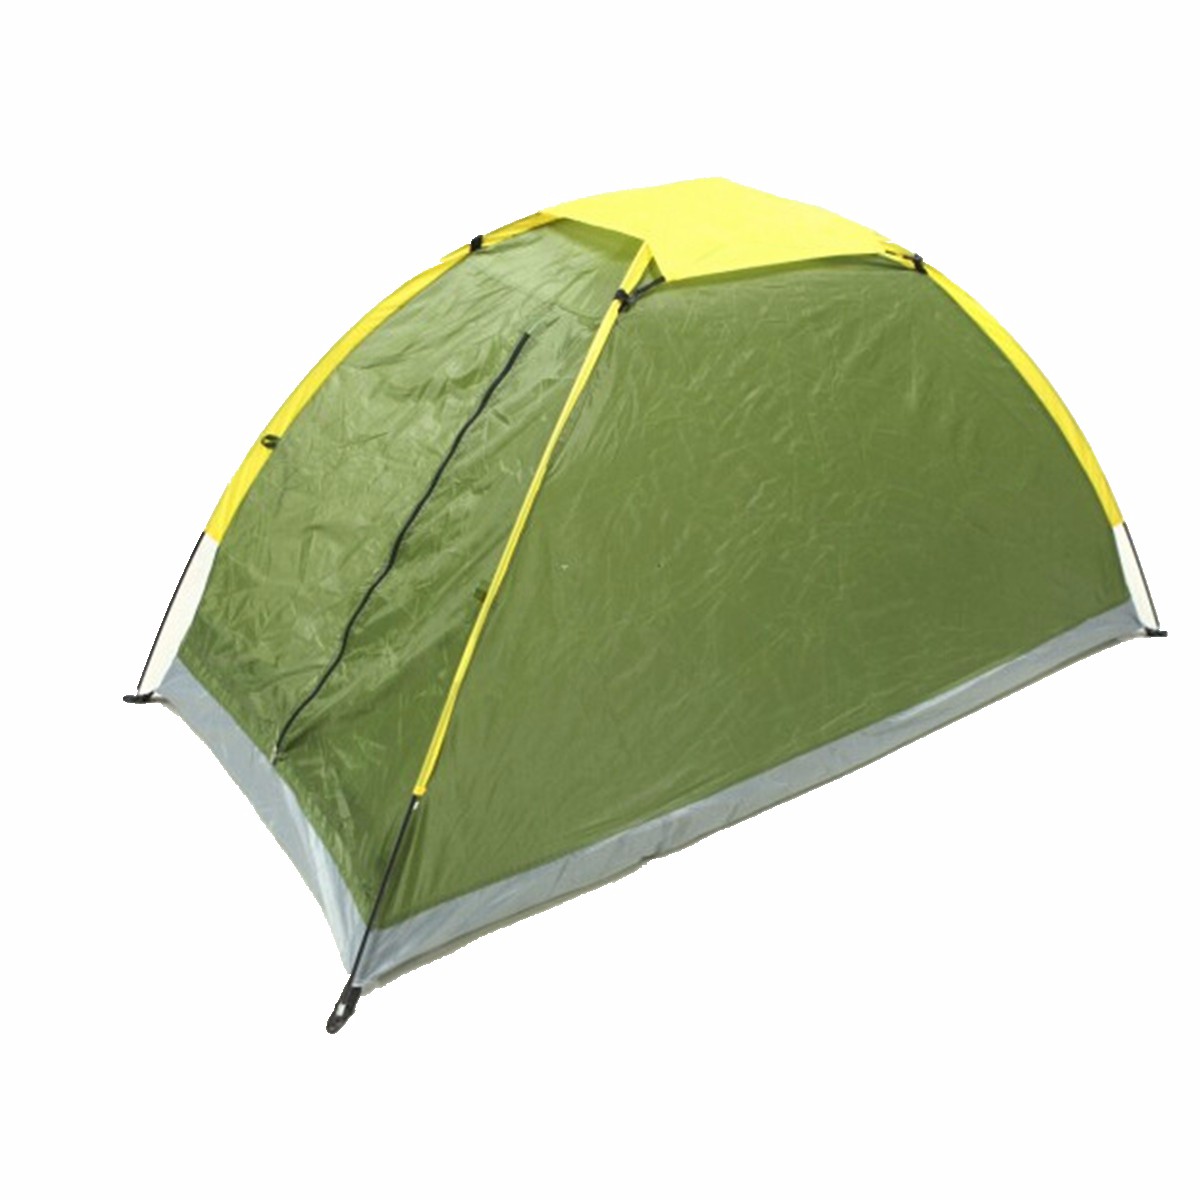 1pcs single-layer 4season waterproof outdoor camping tent lightweight hiking trekking backpacking fishing tourist tent